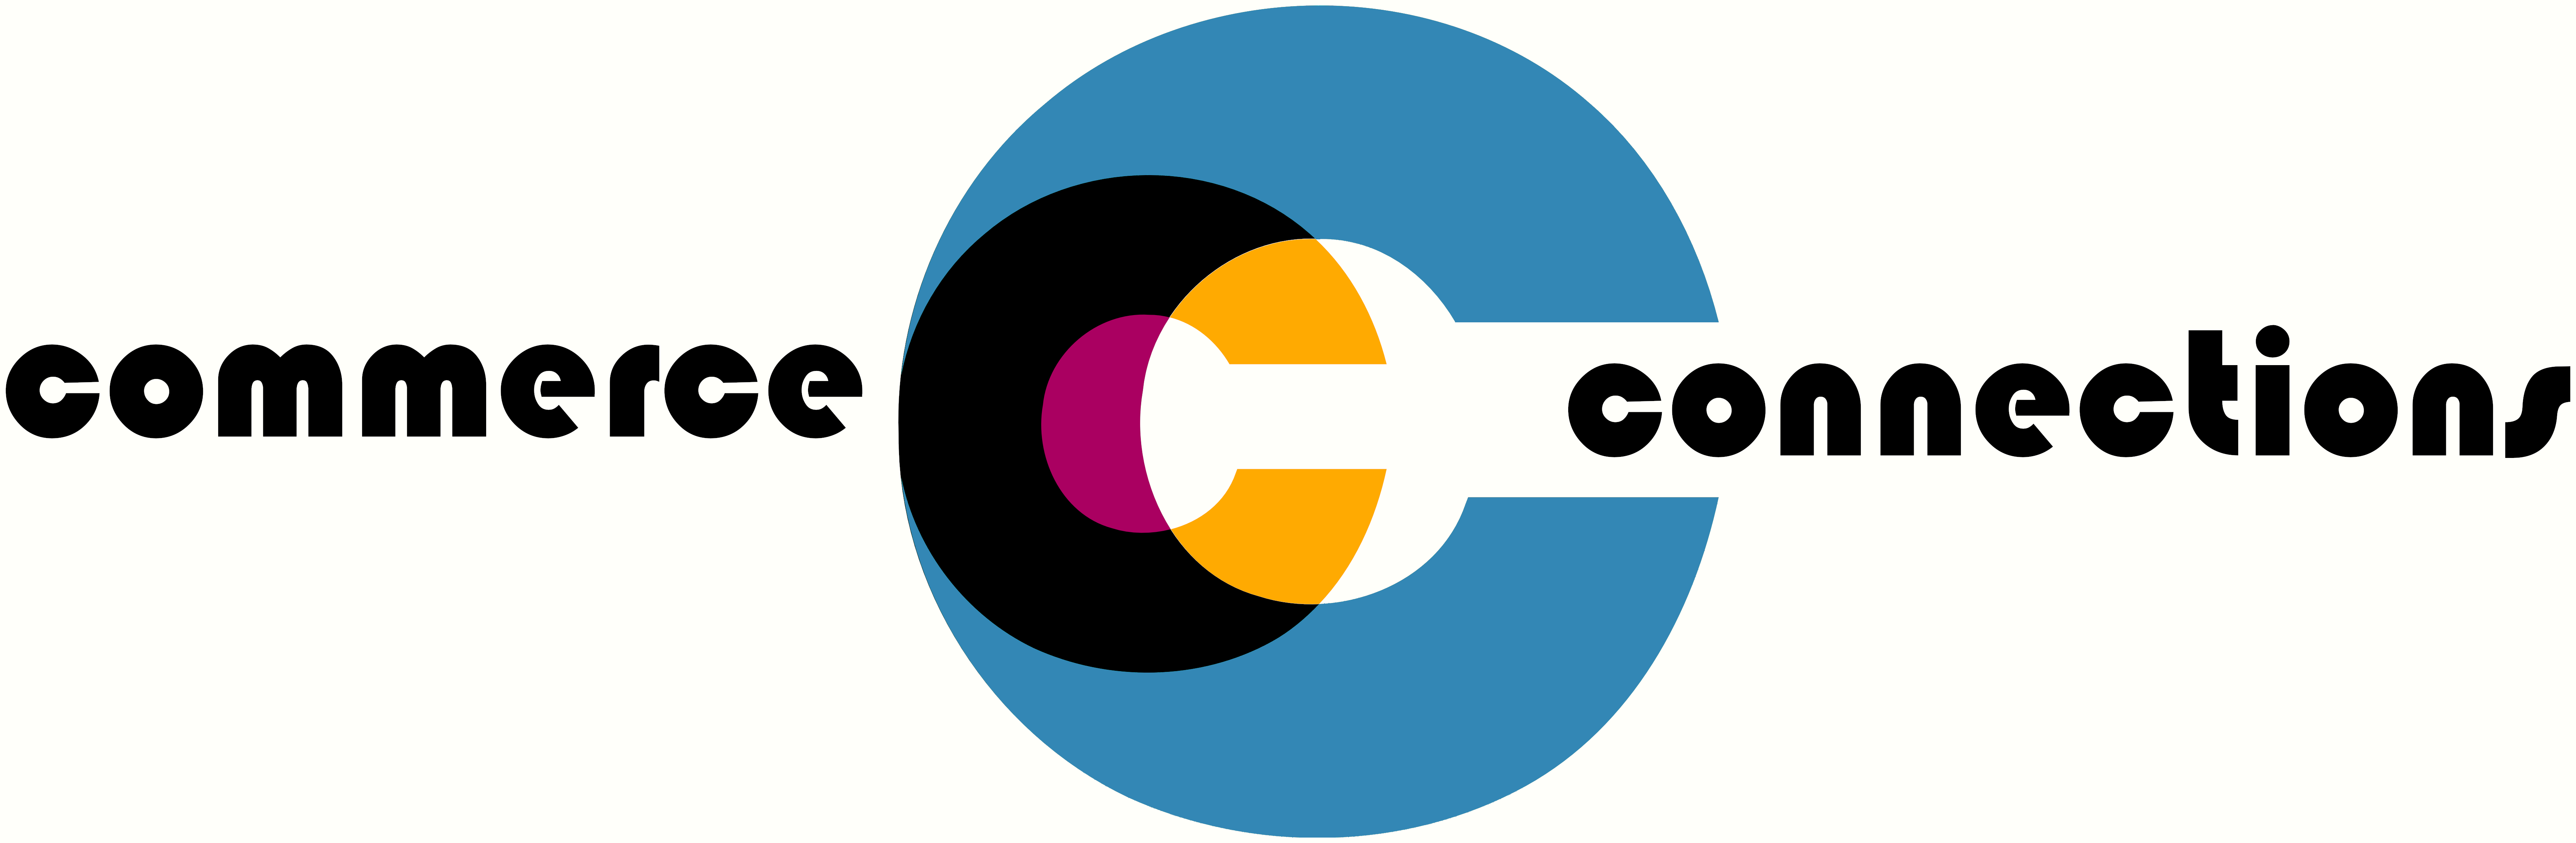 commerce connection logo